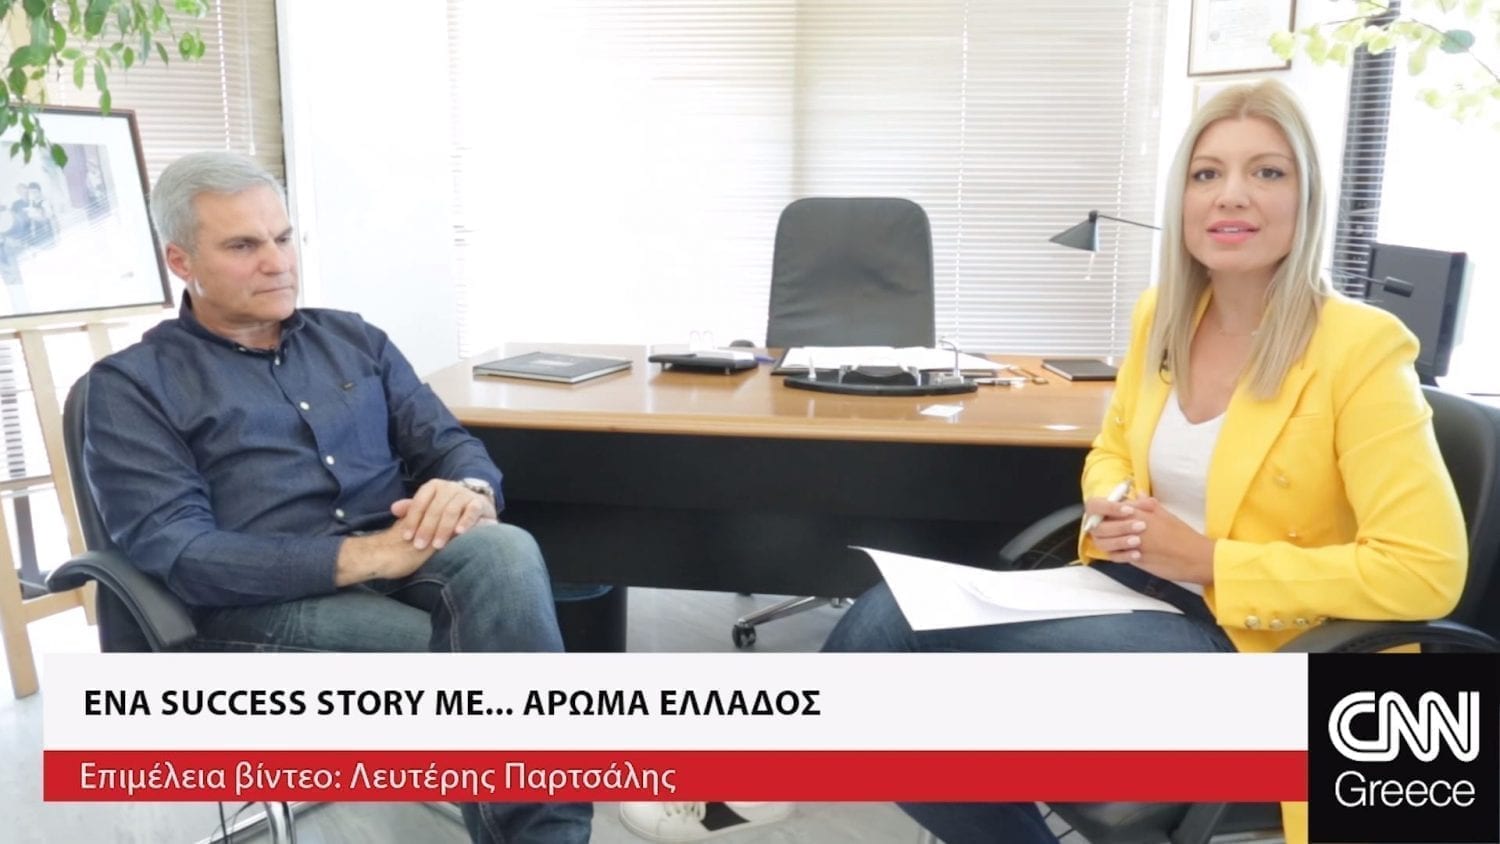 CNN Greece: “Ένα success story με άρωμα Ελλάδος”